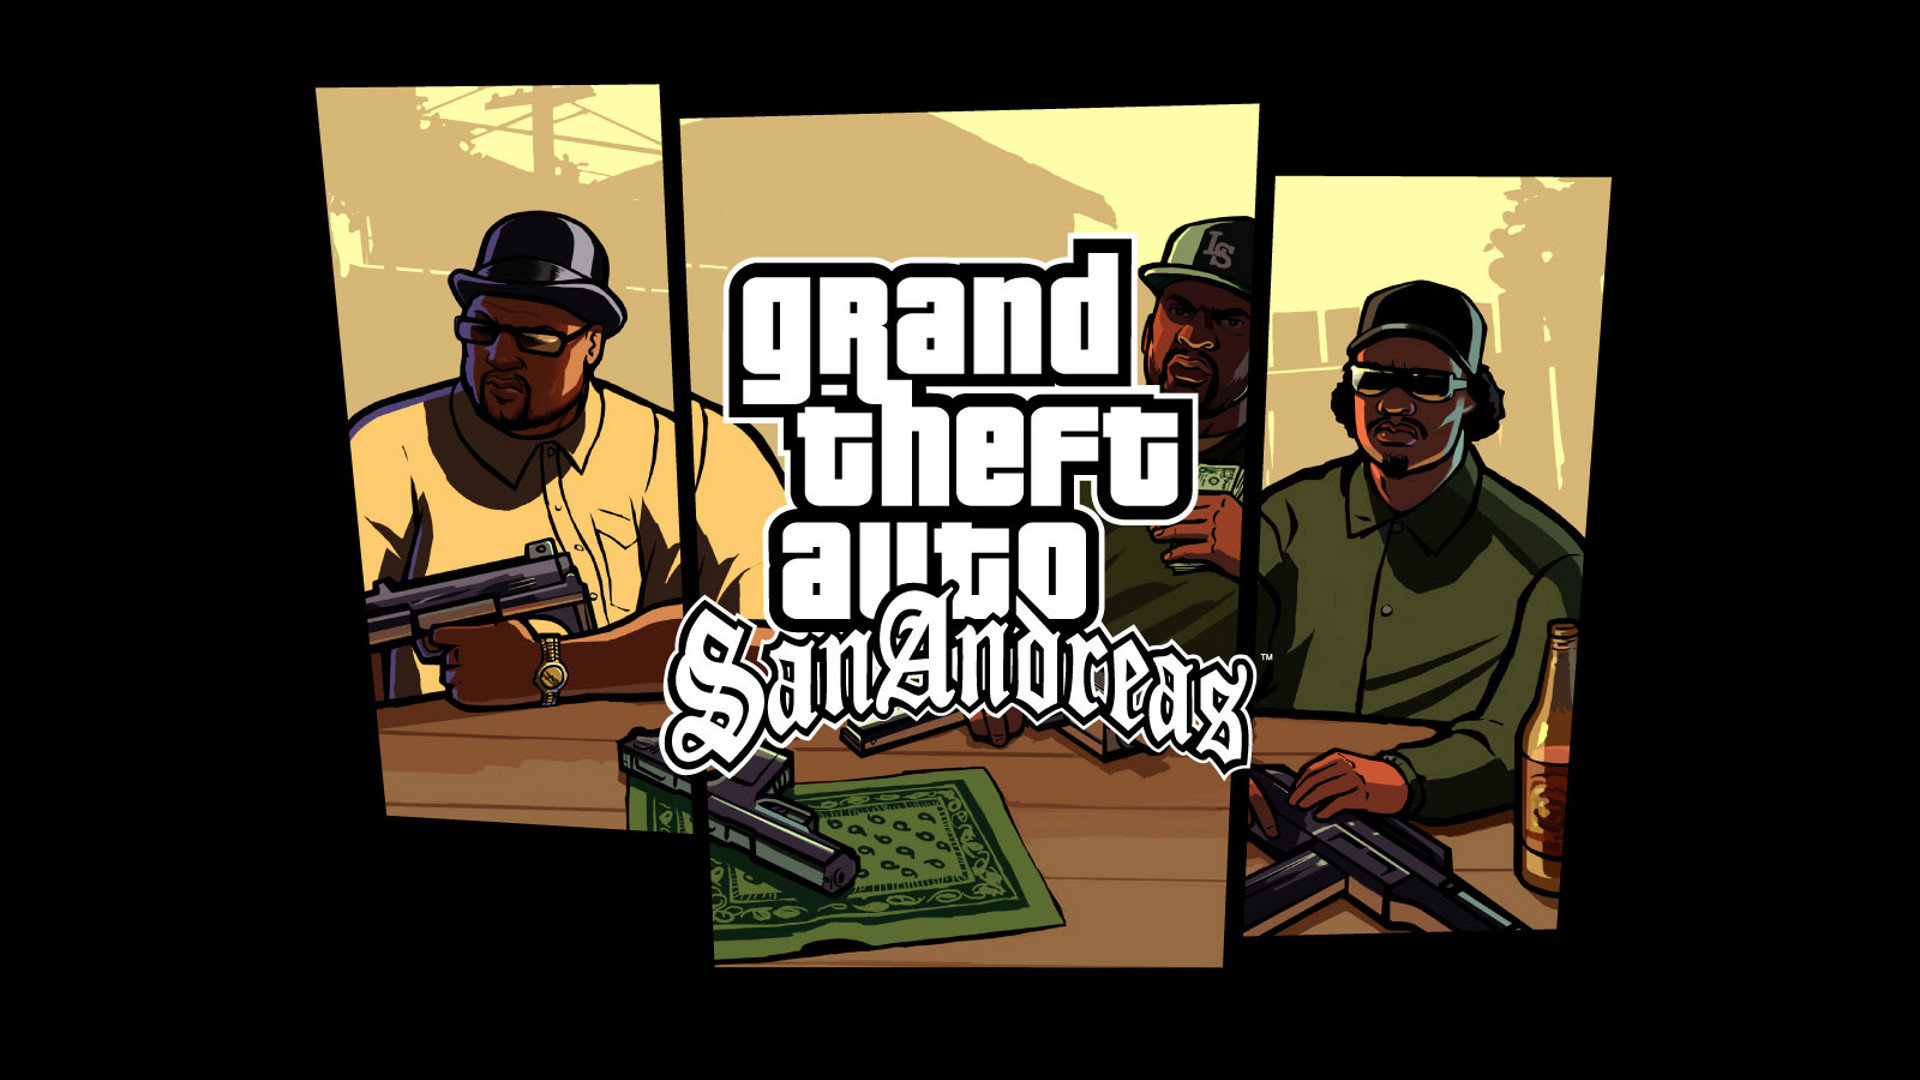 Best Grand Theft Auto: San Andreas (GTA SA) wallpaper ID:72701 for High Resolution hd 1920x1080 computer